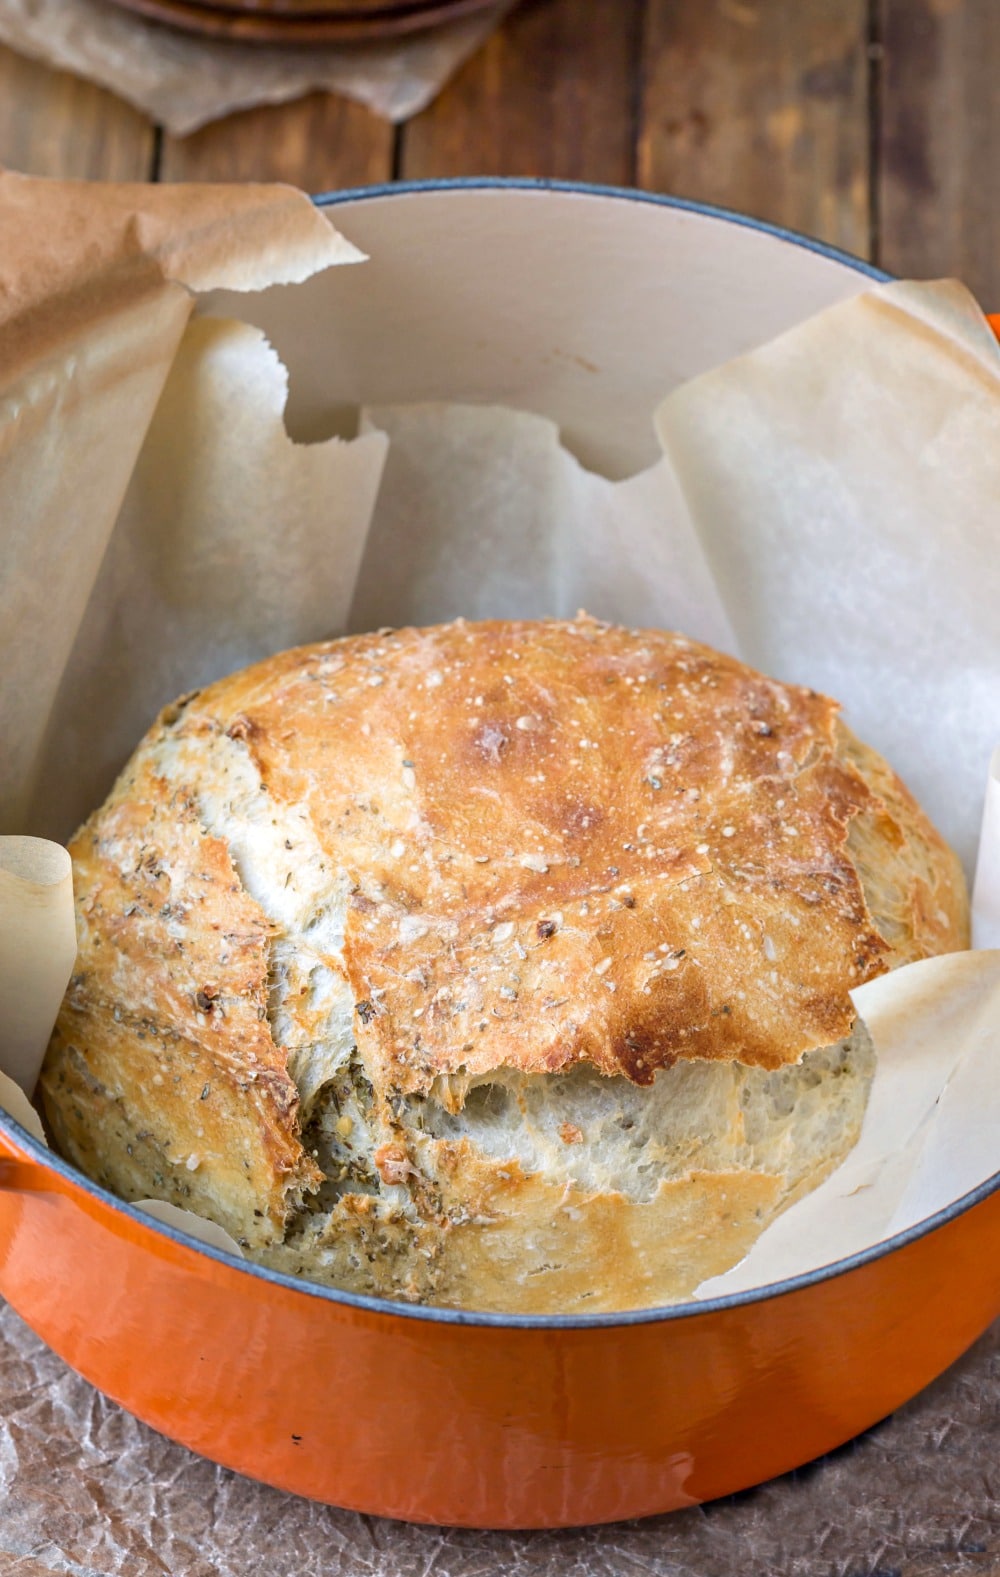 https://www.ihearteating.com/wp-content/uploads/2014/10/garlic-herb-no-knead-bread-1-1000.jpg